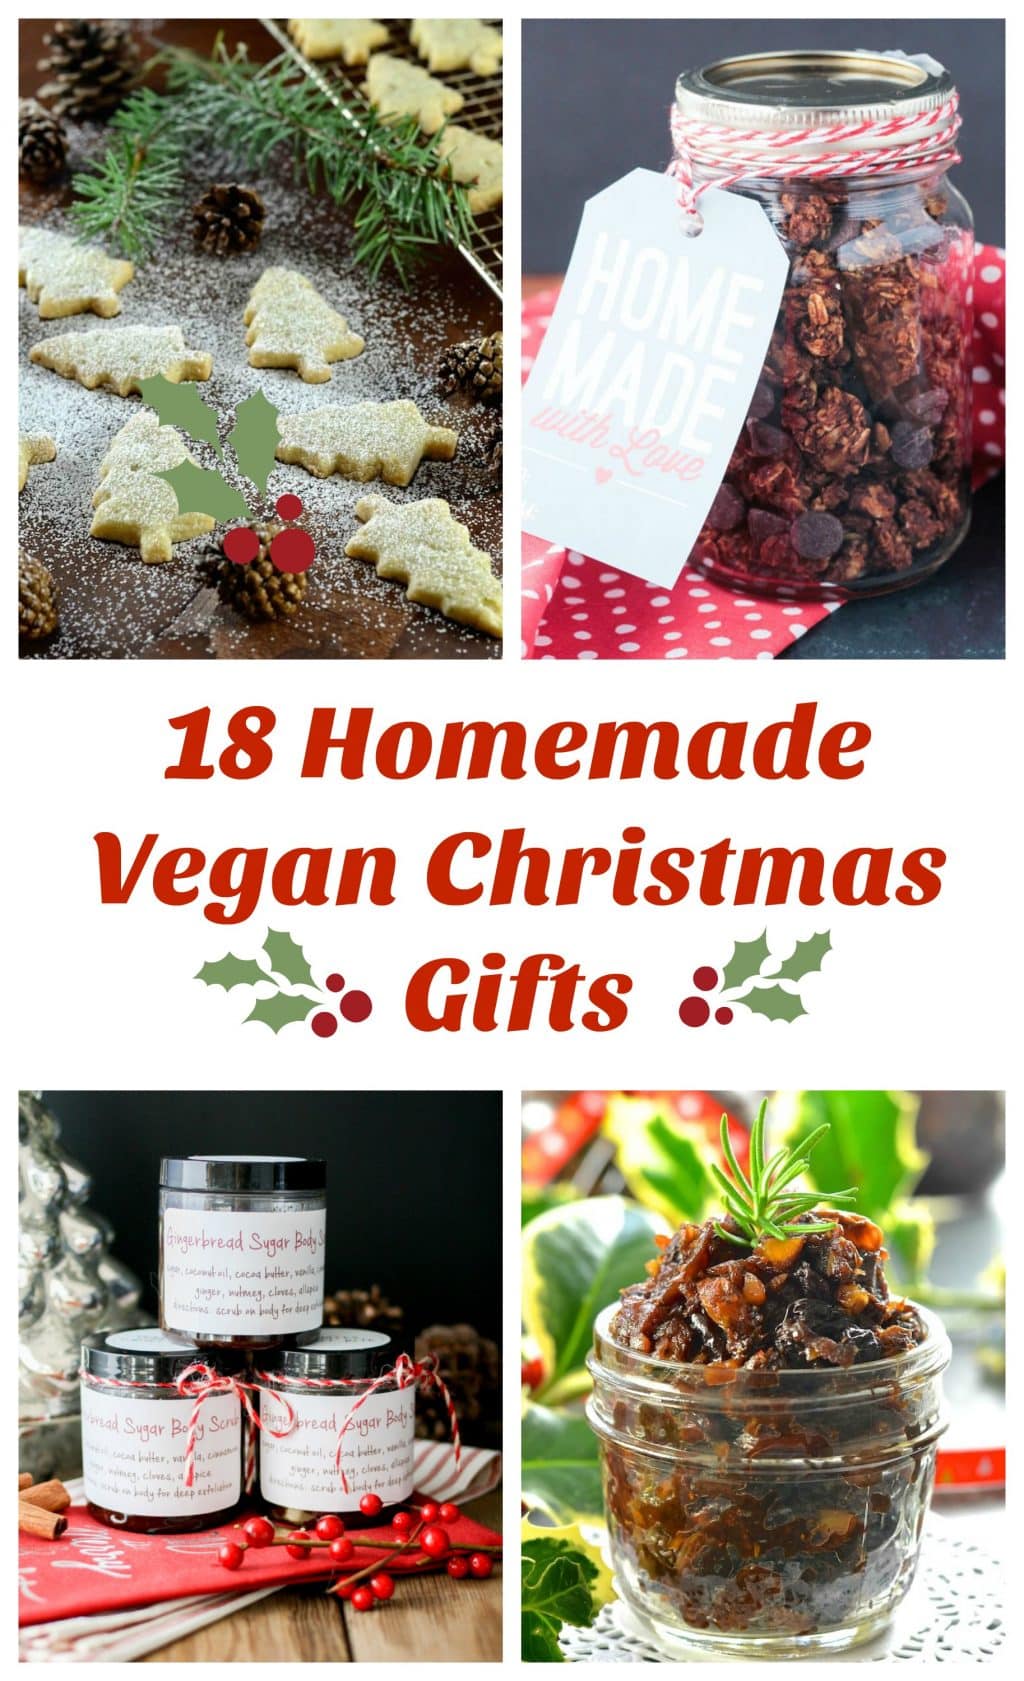 19 homemade vegan christmas gifts - a virtual vegan